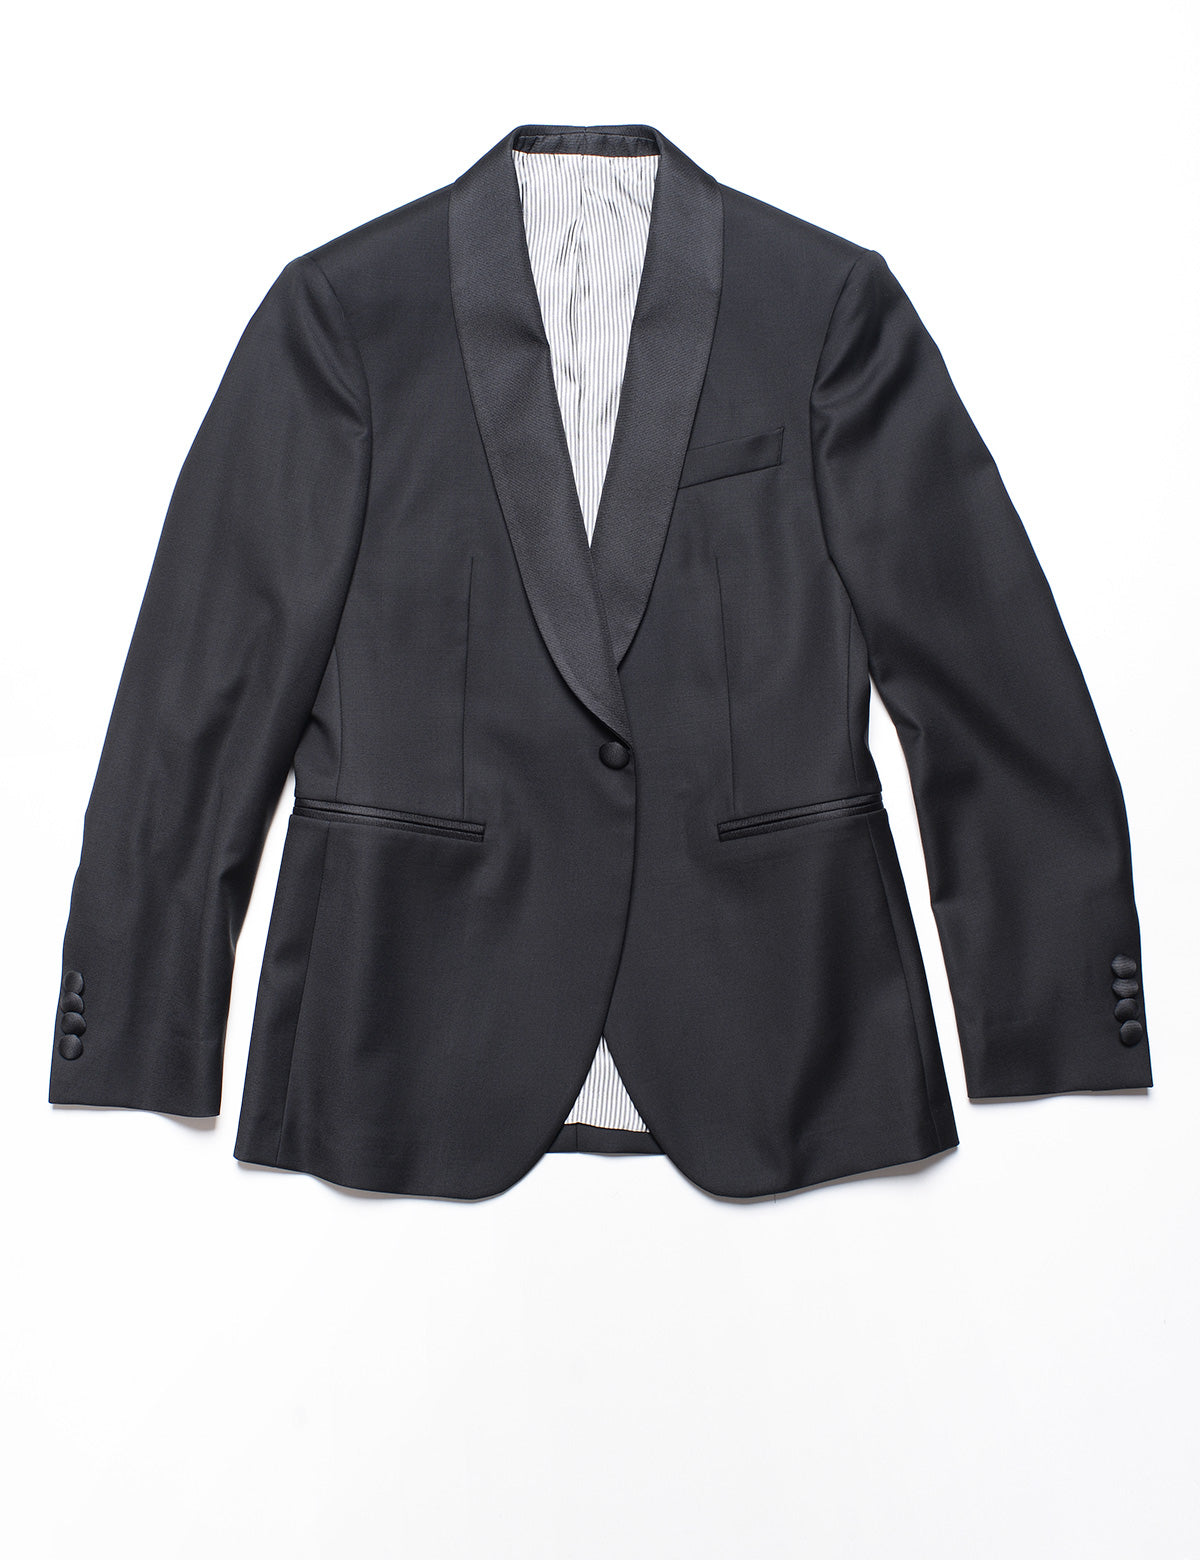 Brooklyn Tailors BKT50 Shawl Collar Tuxedo Jacket in Super 120s Twill - Black with Grosgrain Lapel full length flat shot